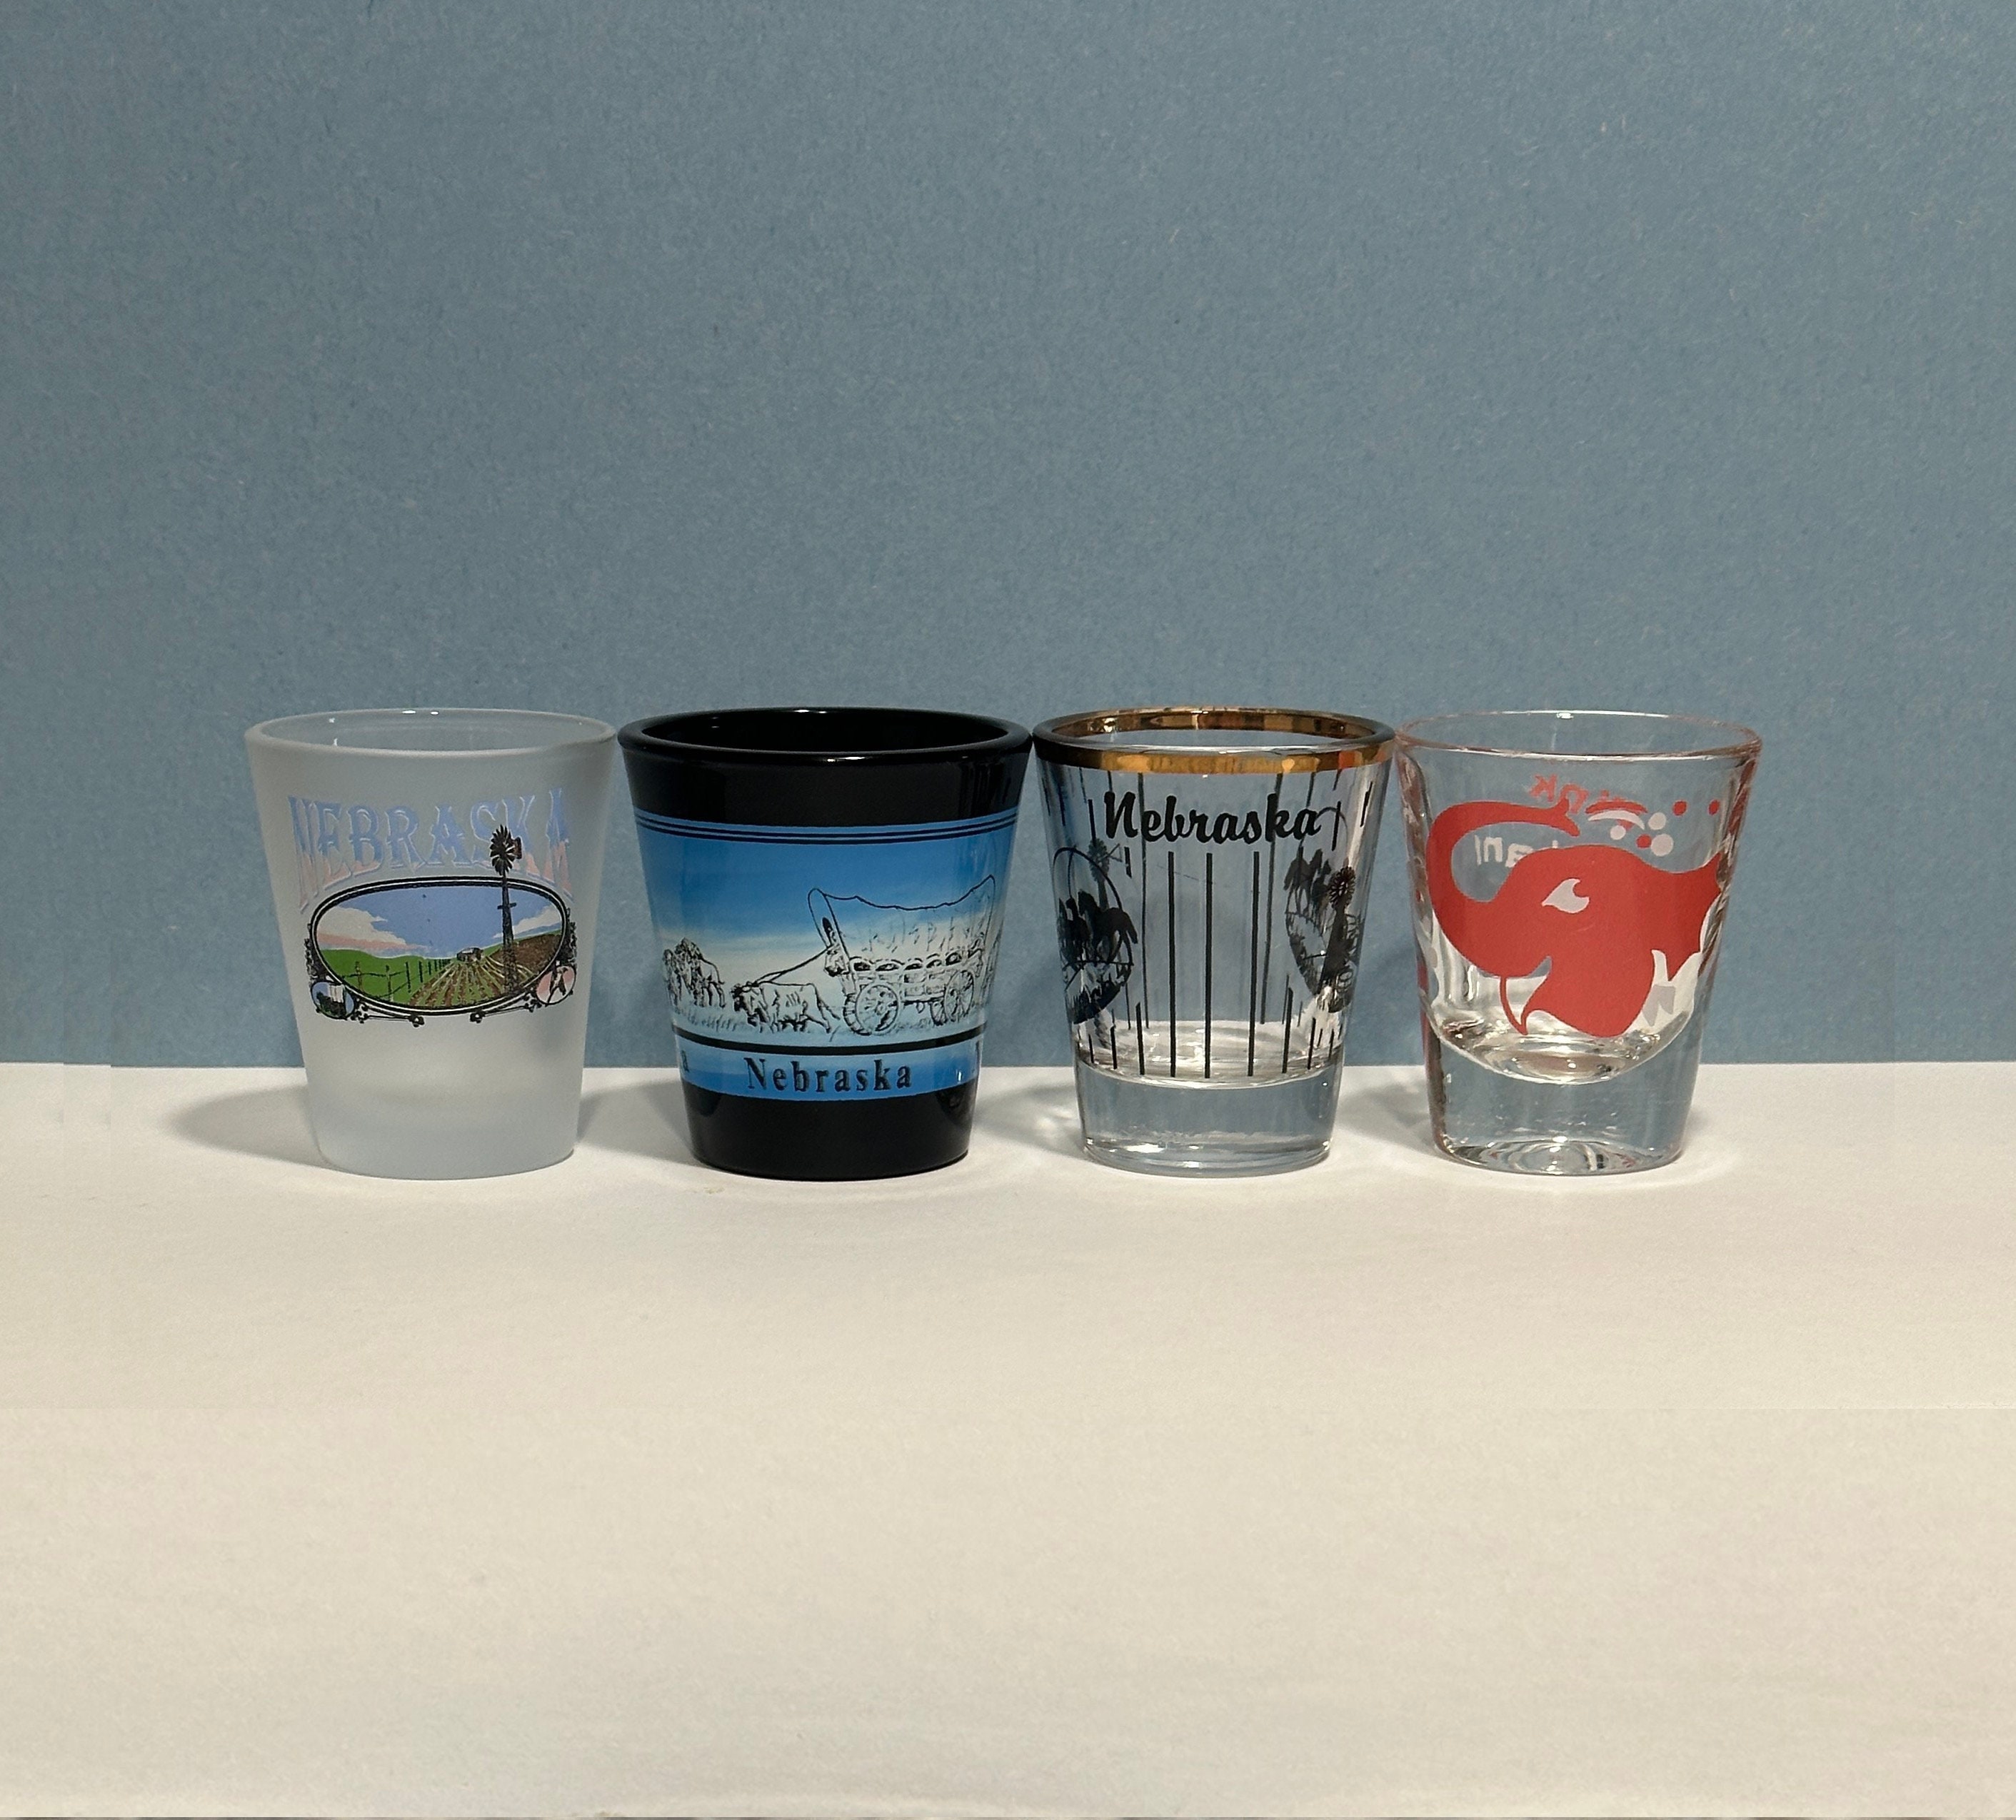 Straight shot glass mold – AaJMolds